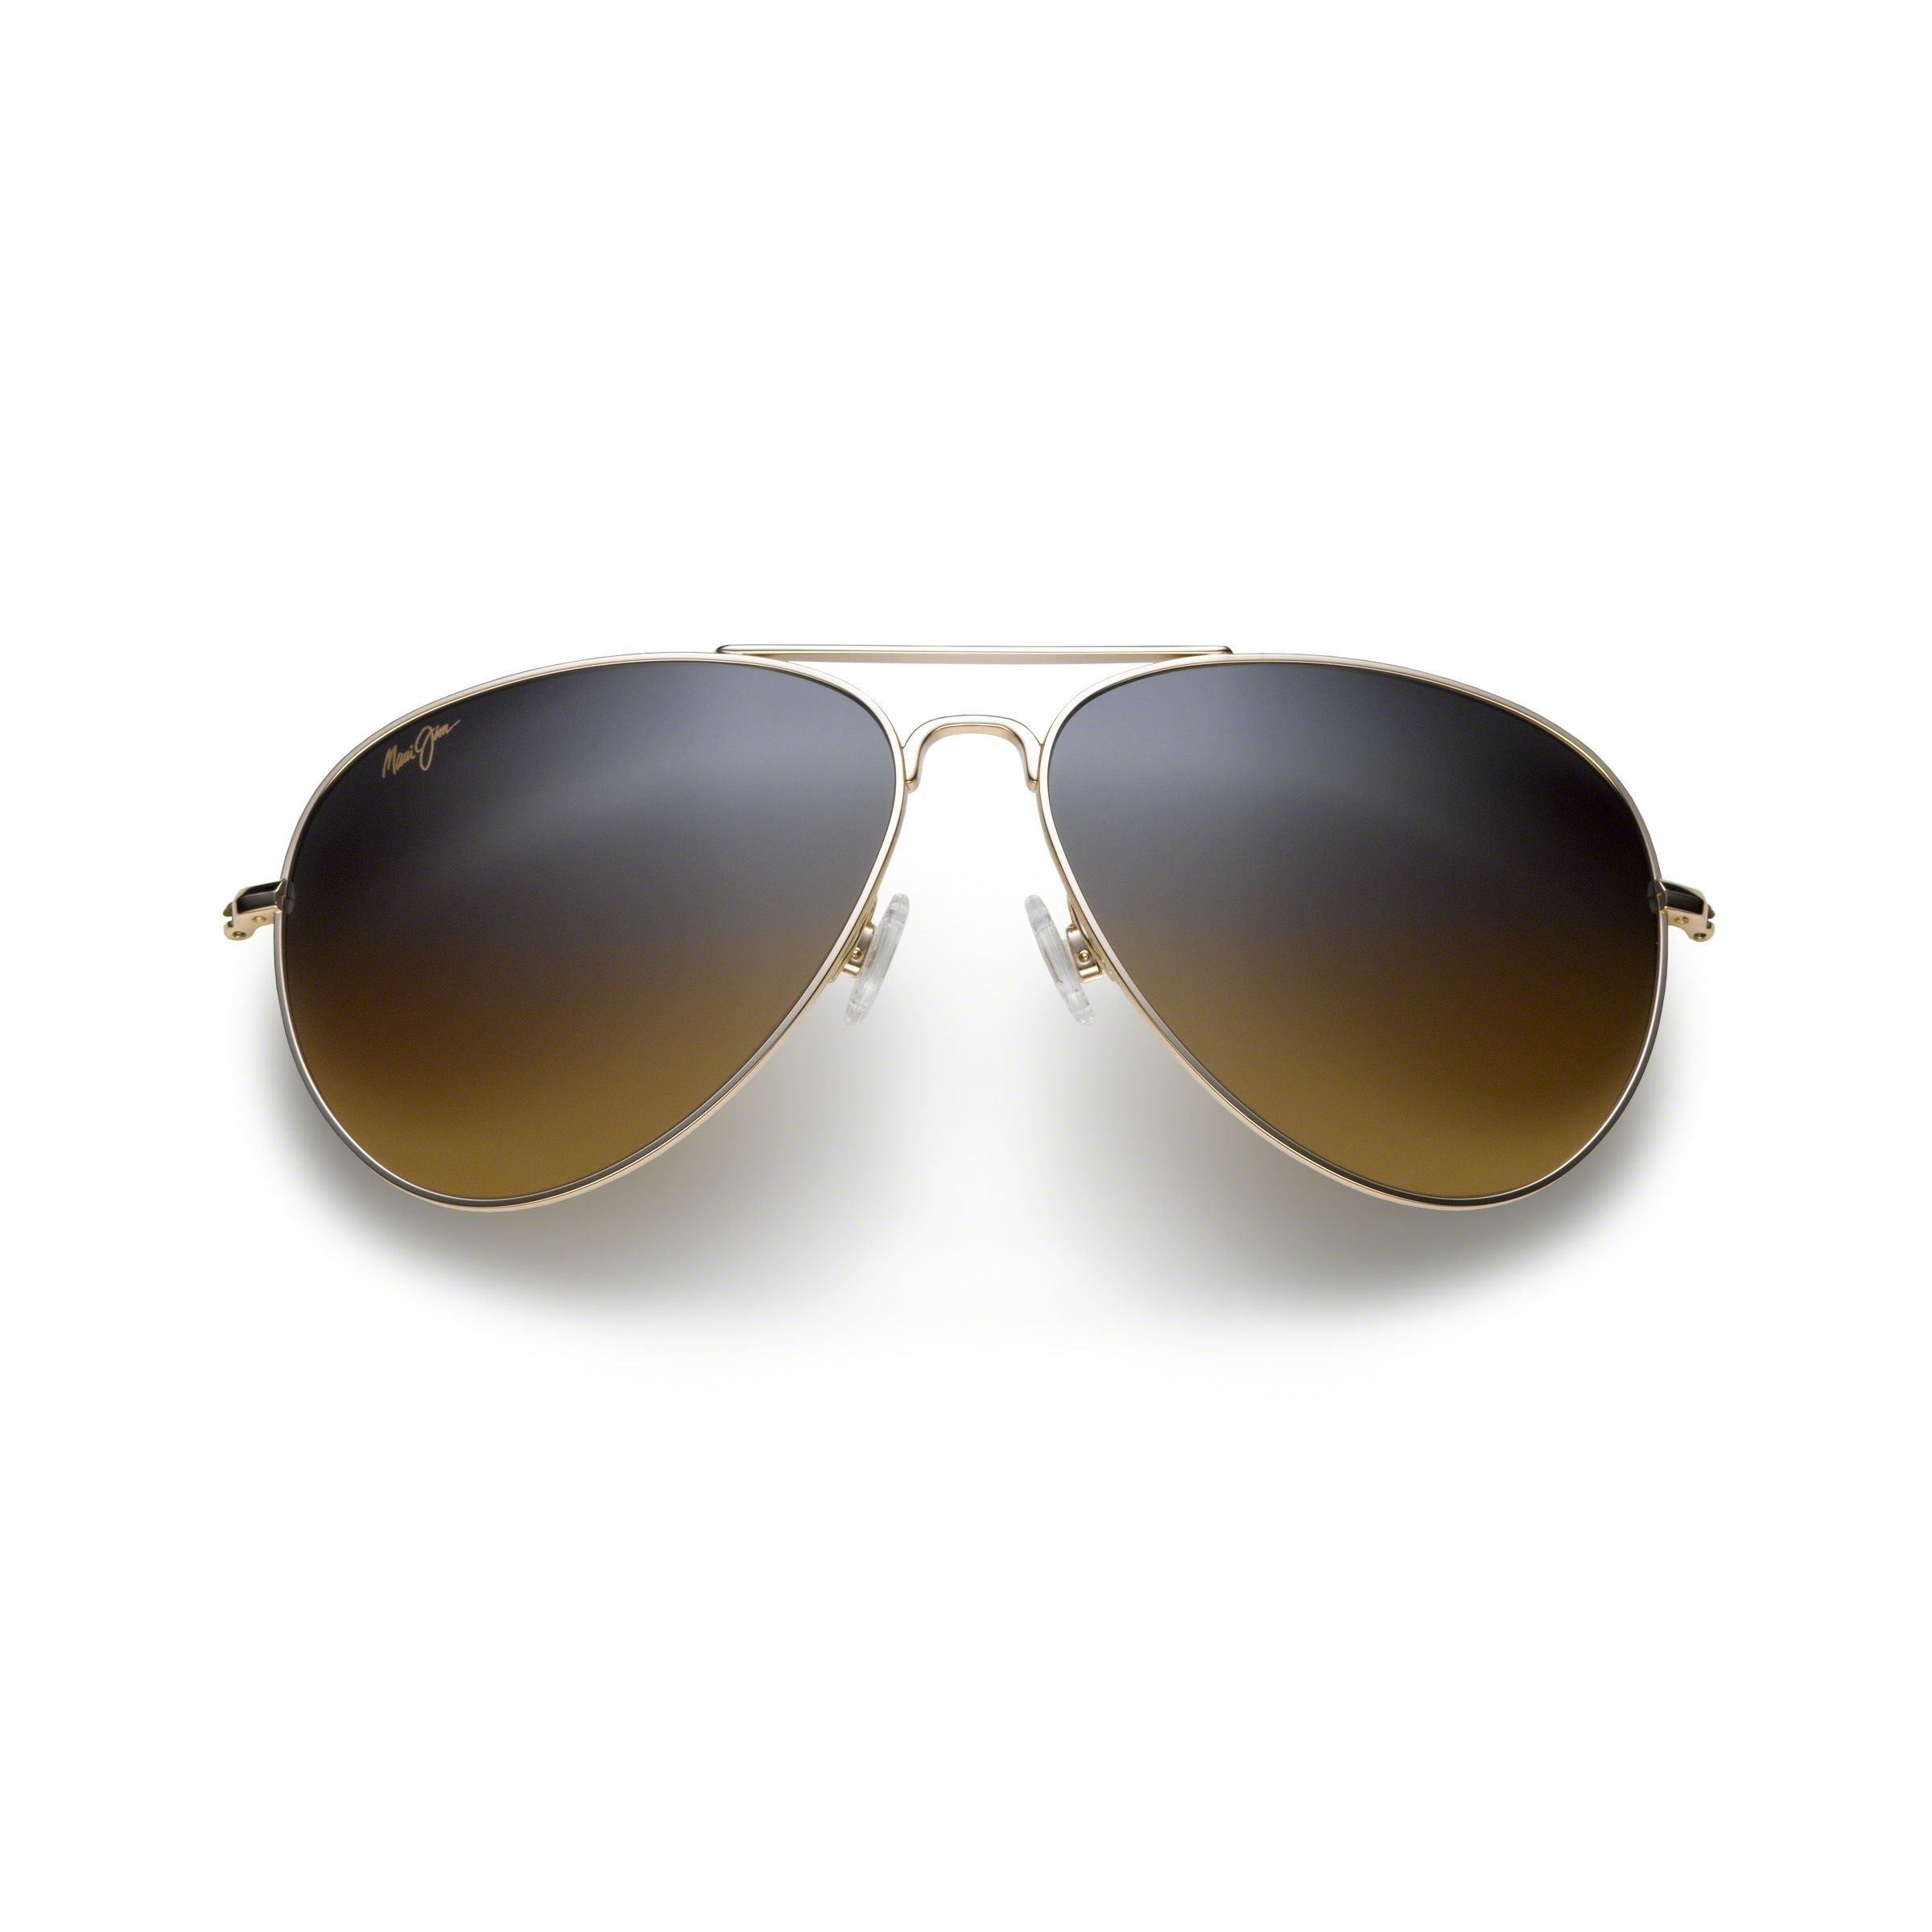 MAVERICKS Pilot Sunglasses 16 - size 61